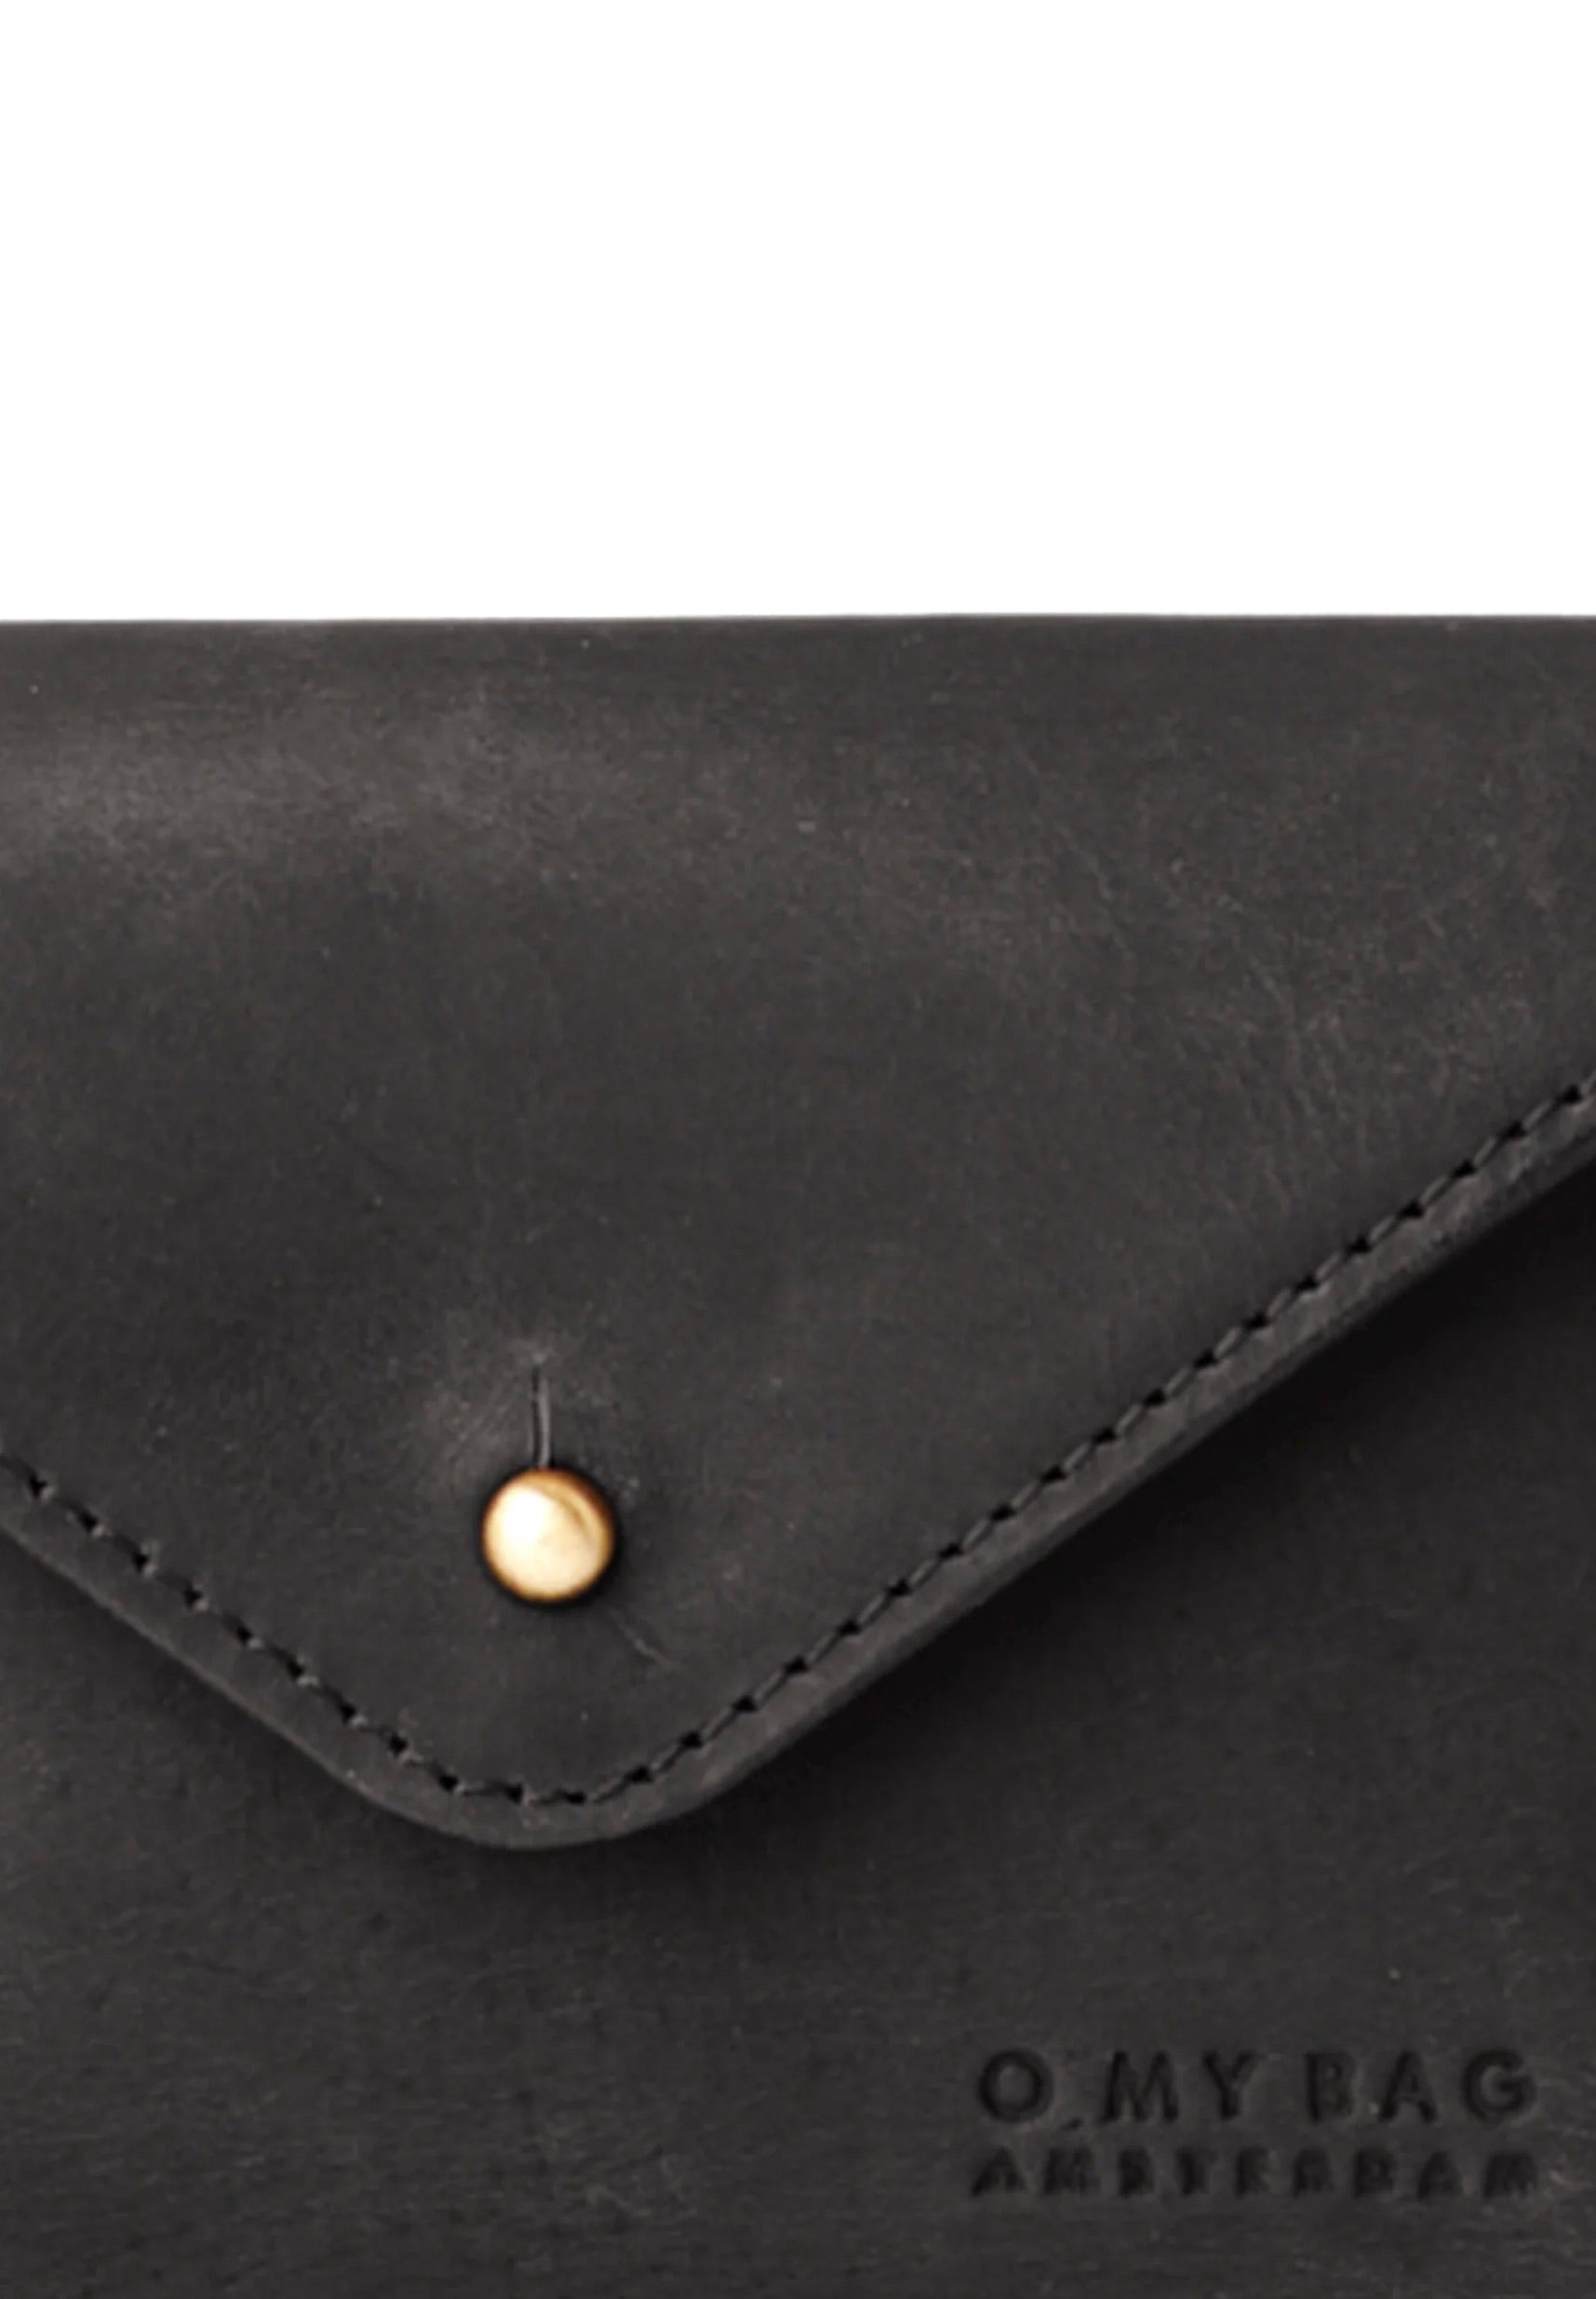 josie's purse black hunter leather